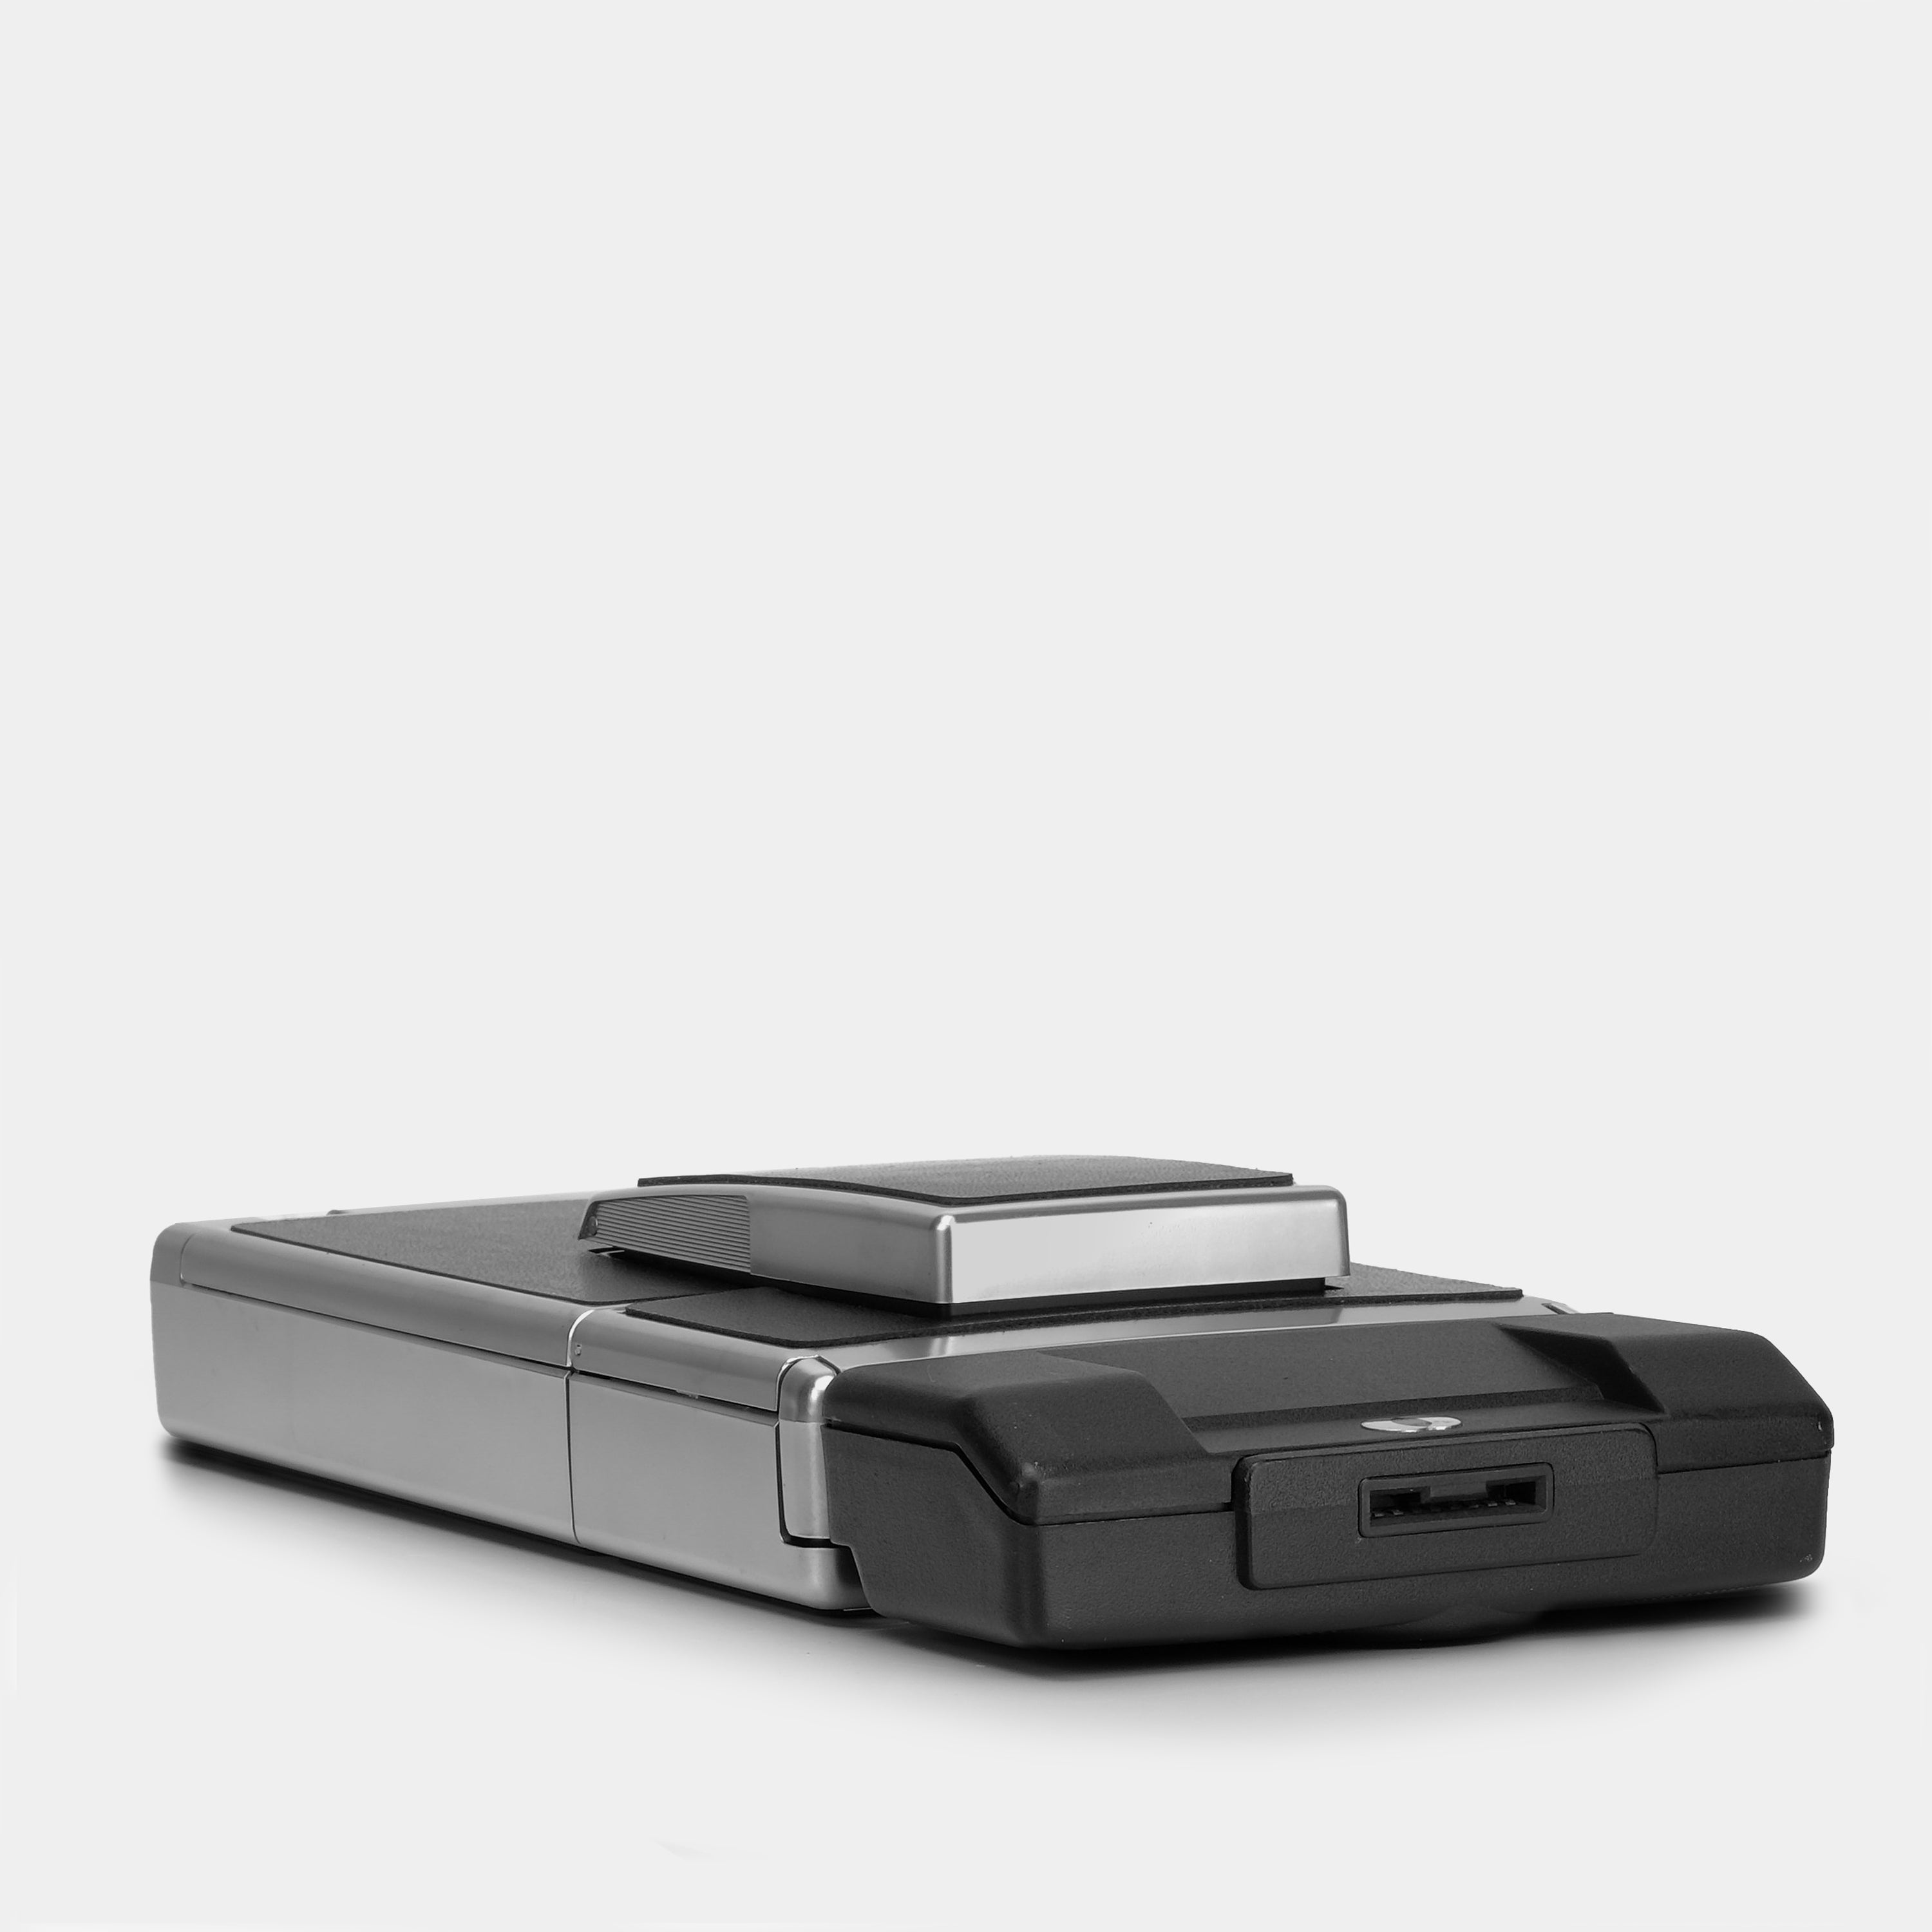 Polaroid SX-70 Sonar Autofocus Chrome Folding Instant Film Camera